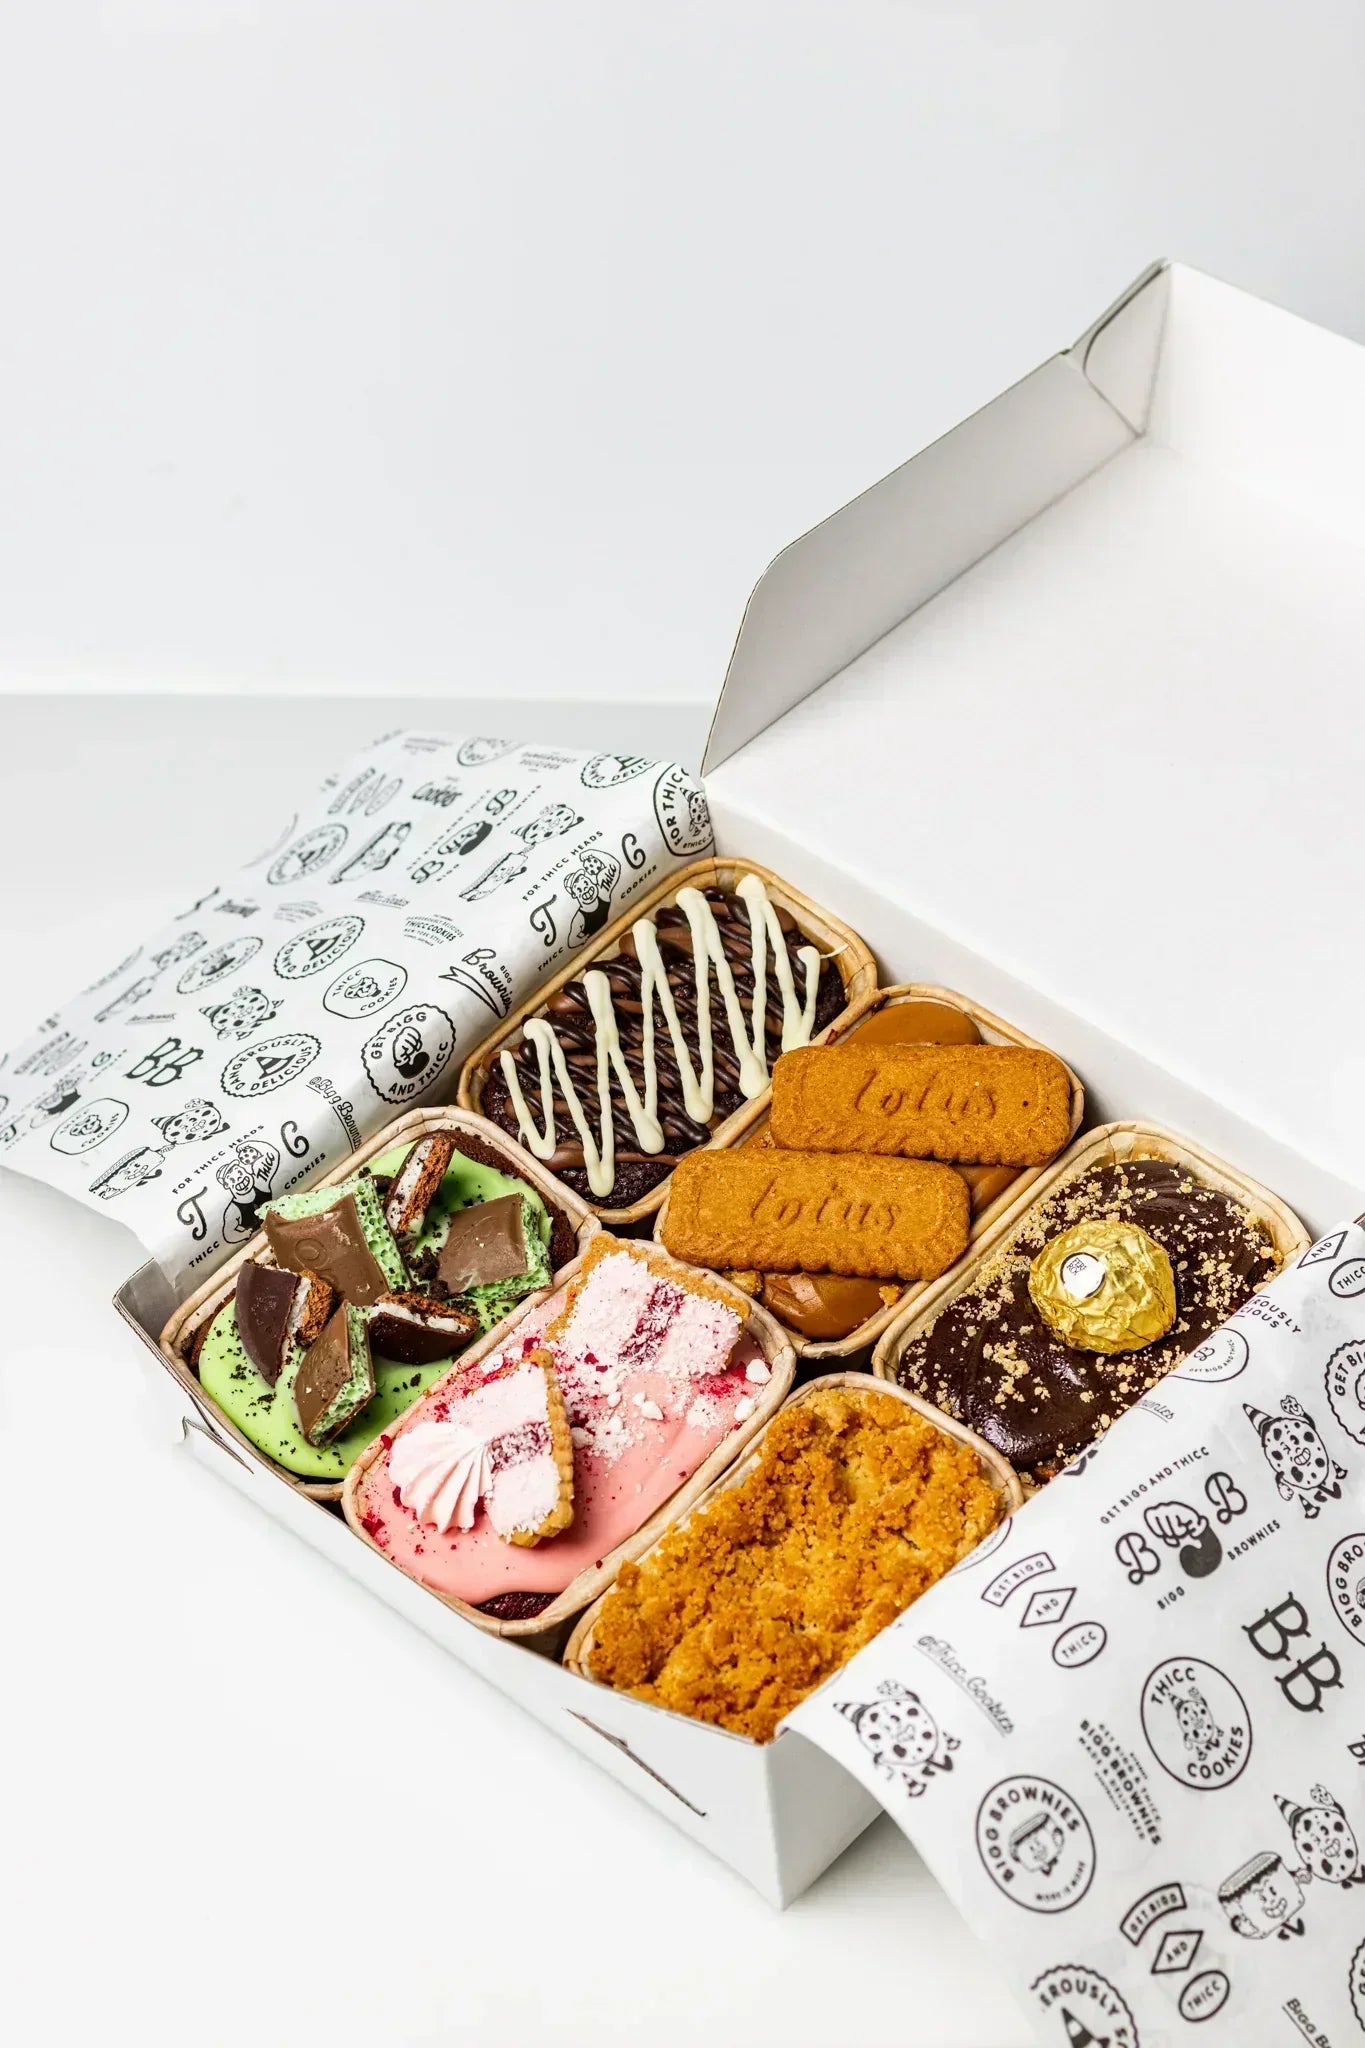 "Sponsored By Dad" Box- BIGG Brownies & THICC Cookies - New York Style Cookies